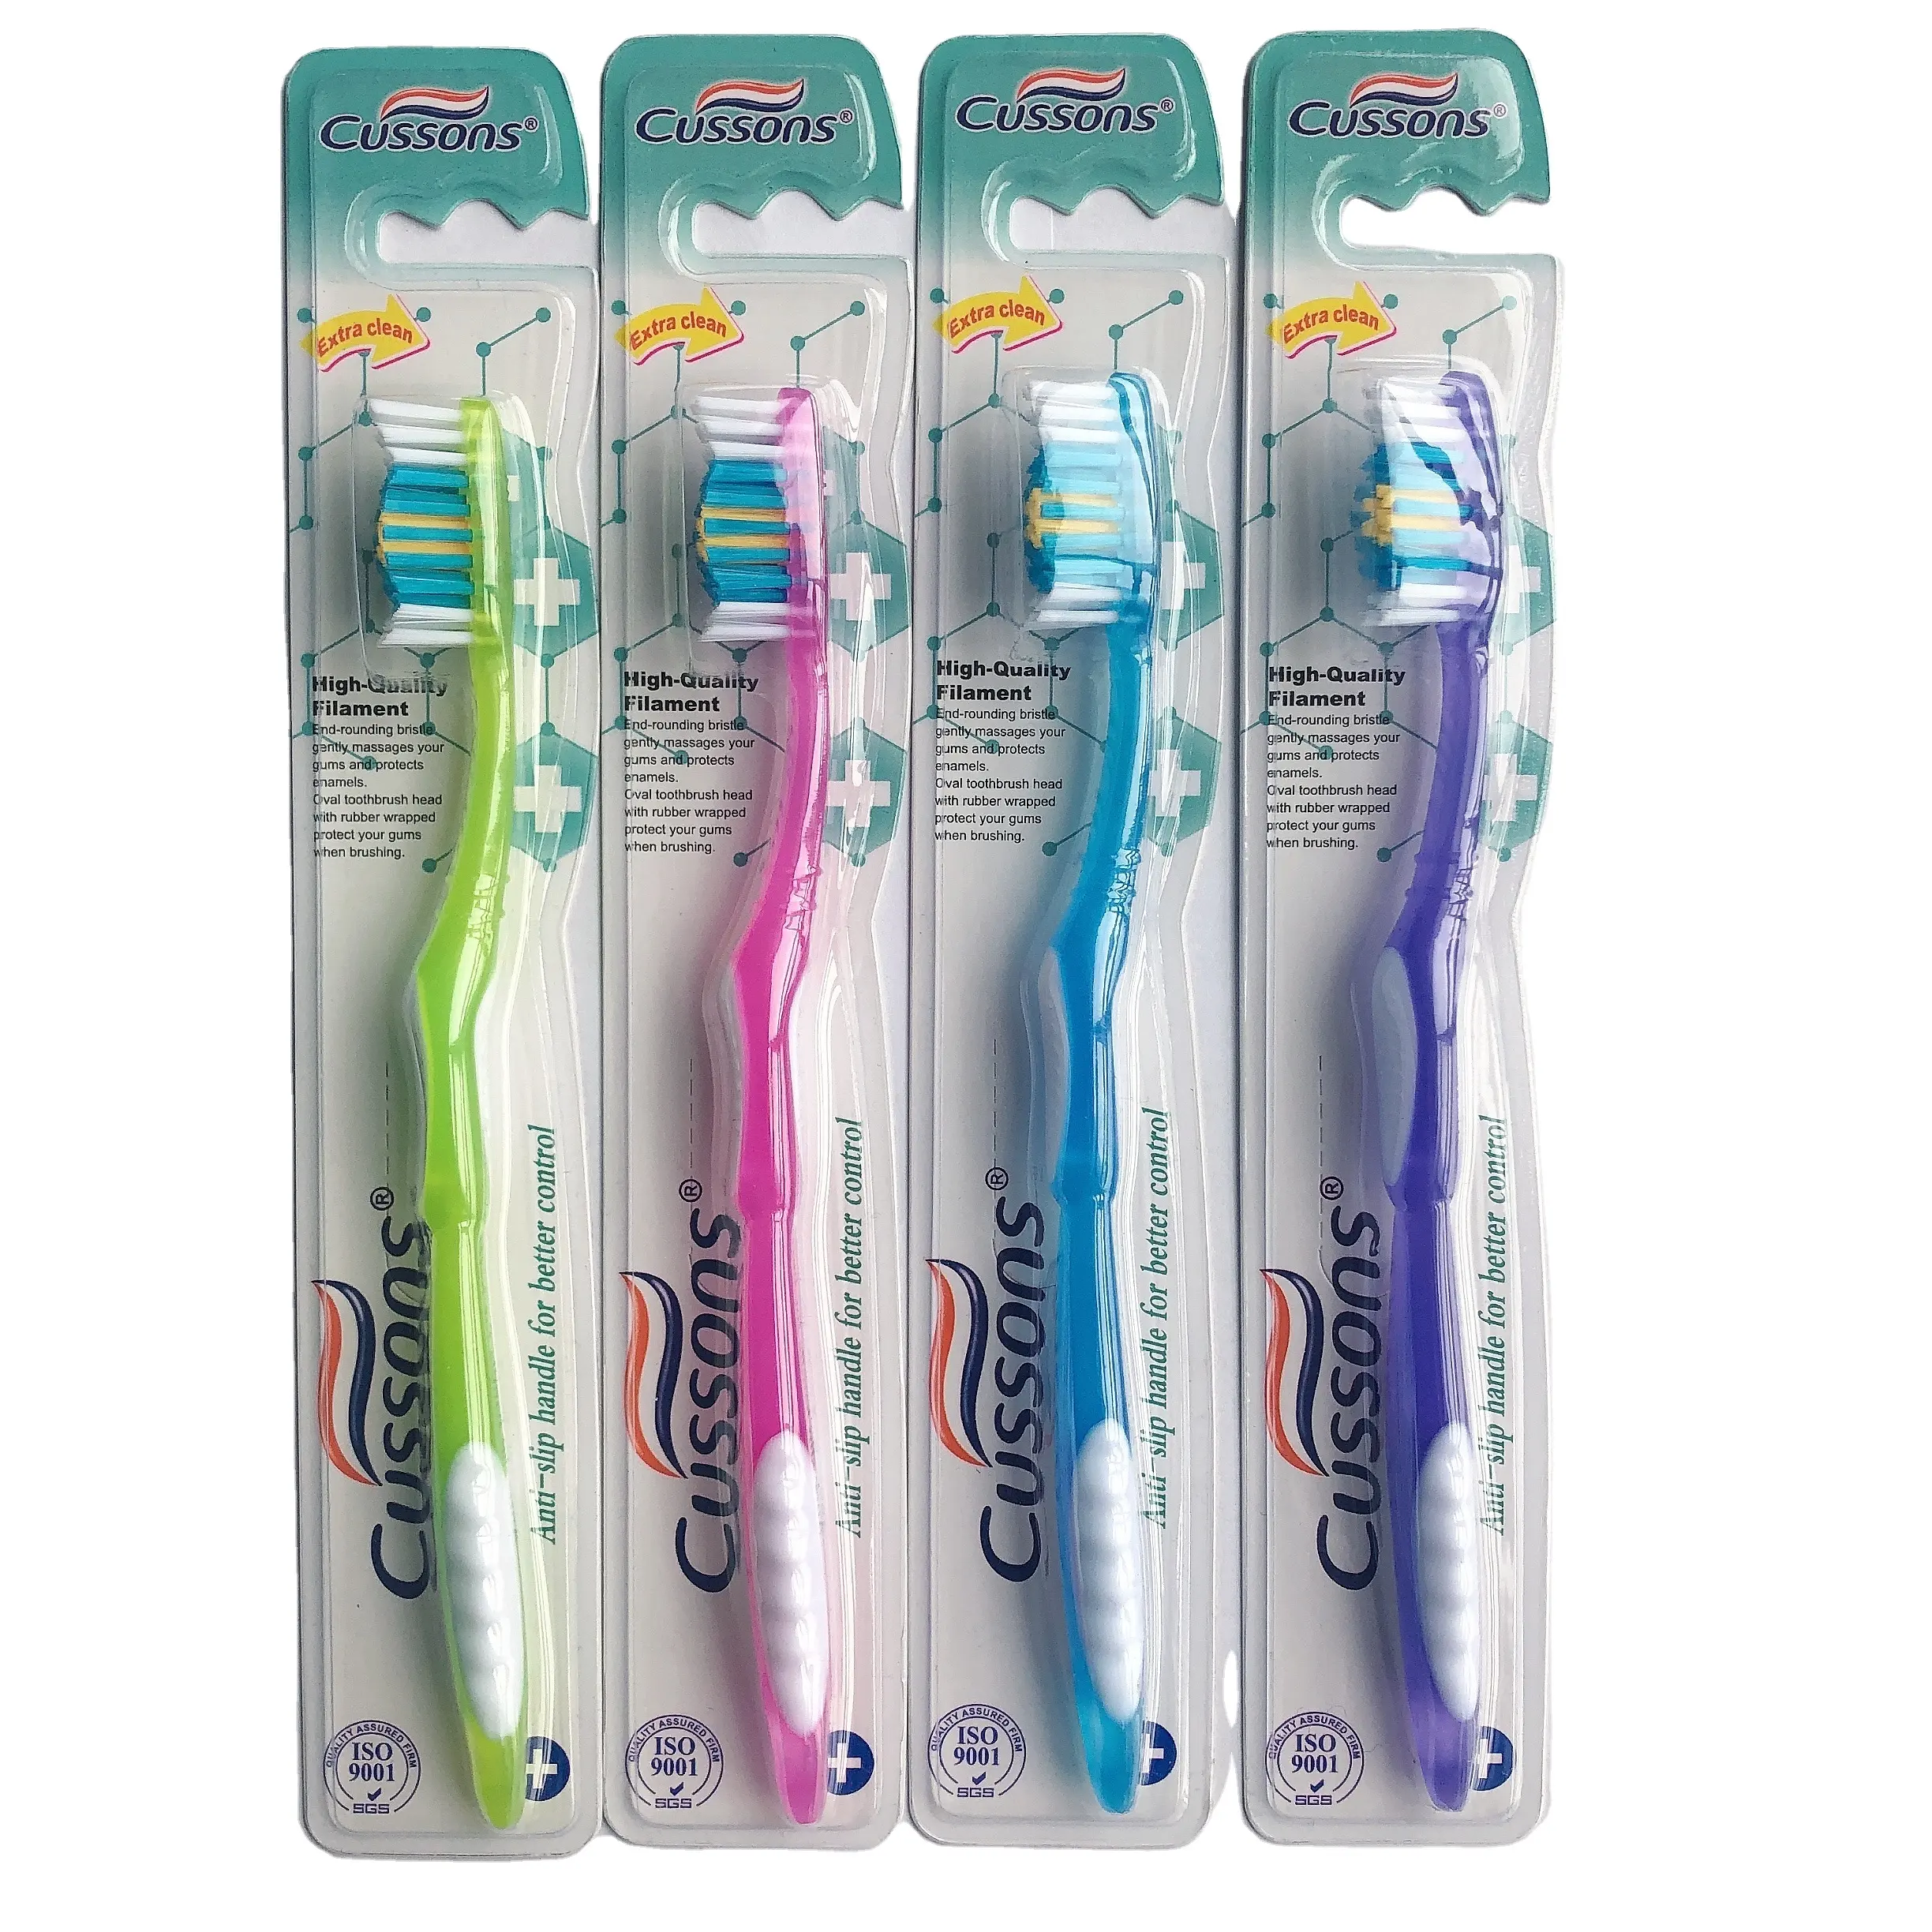 High quality nylon medium bristles spot adult plastic toothbrush